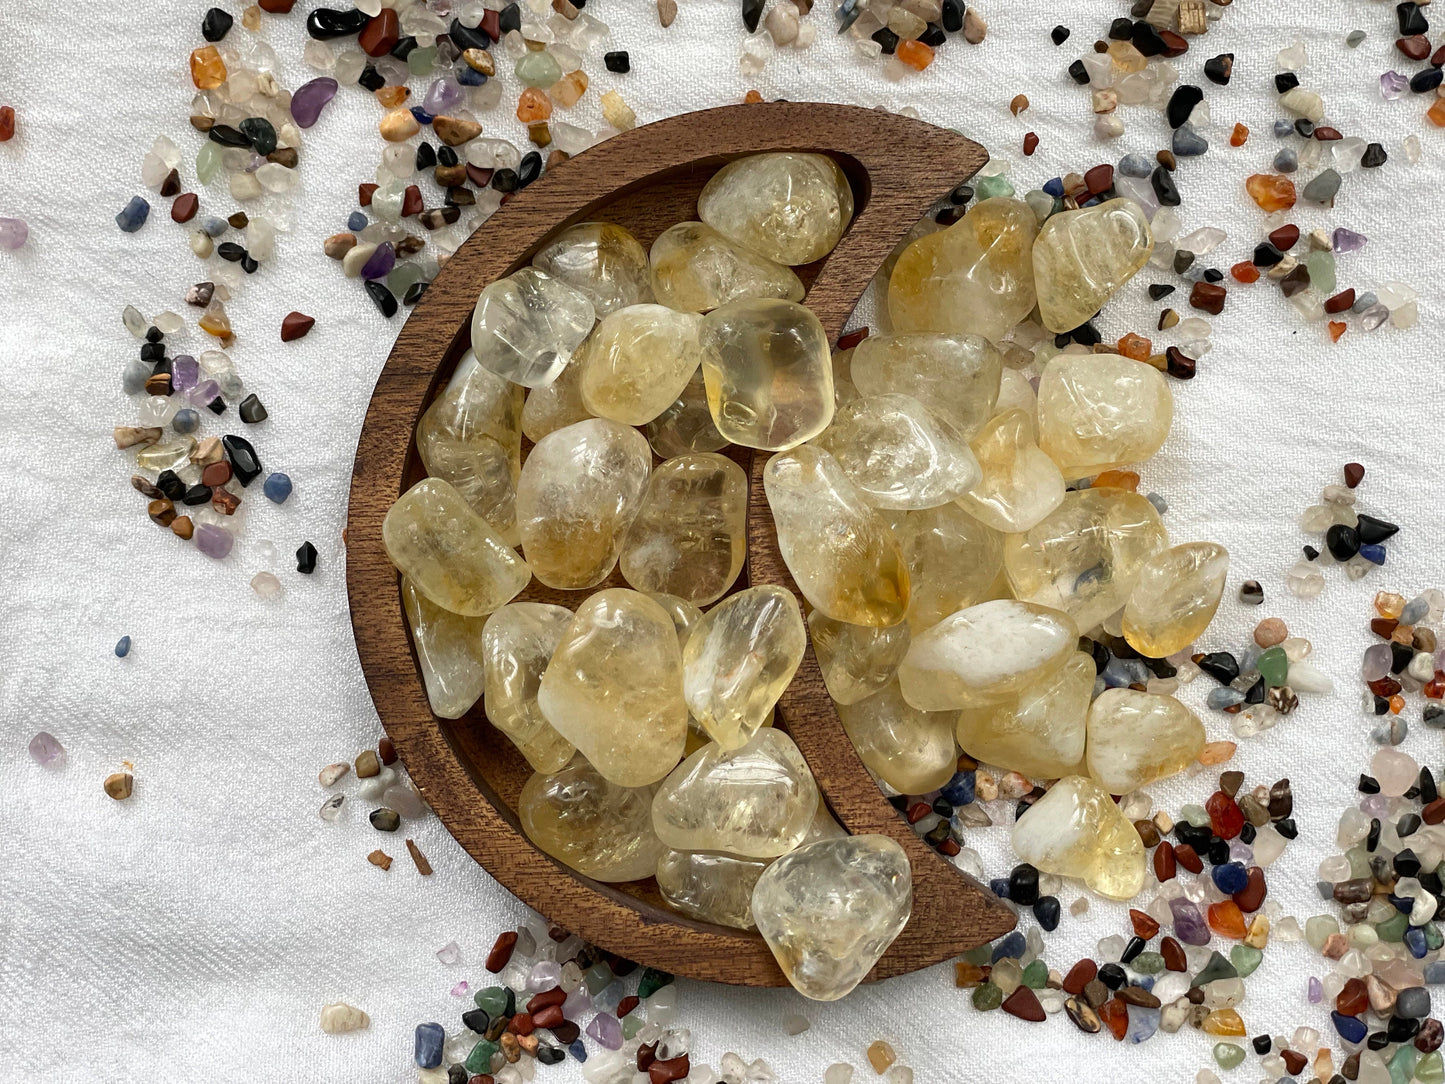 Tumbled citrine | Solar Plexus Chakra Stone | Crystal for Prosperity and Joy